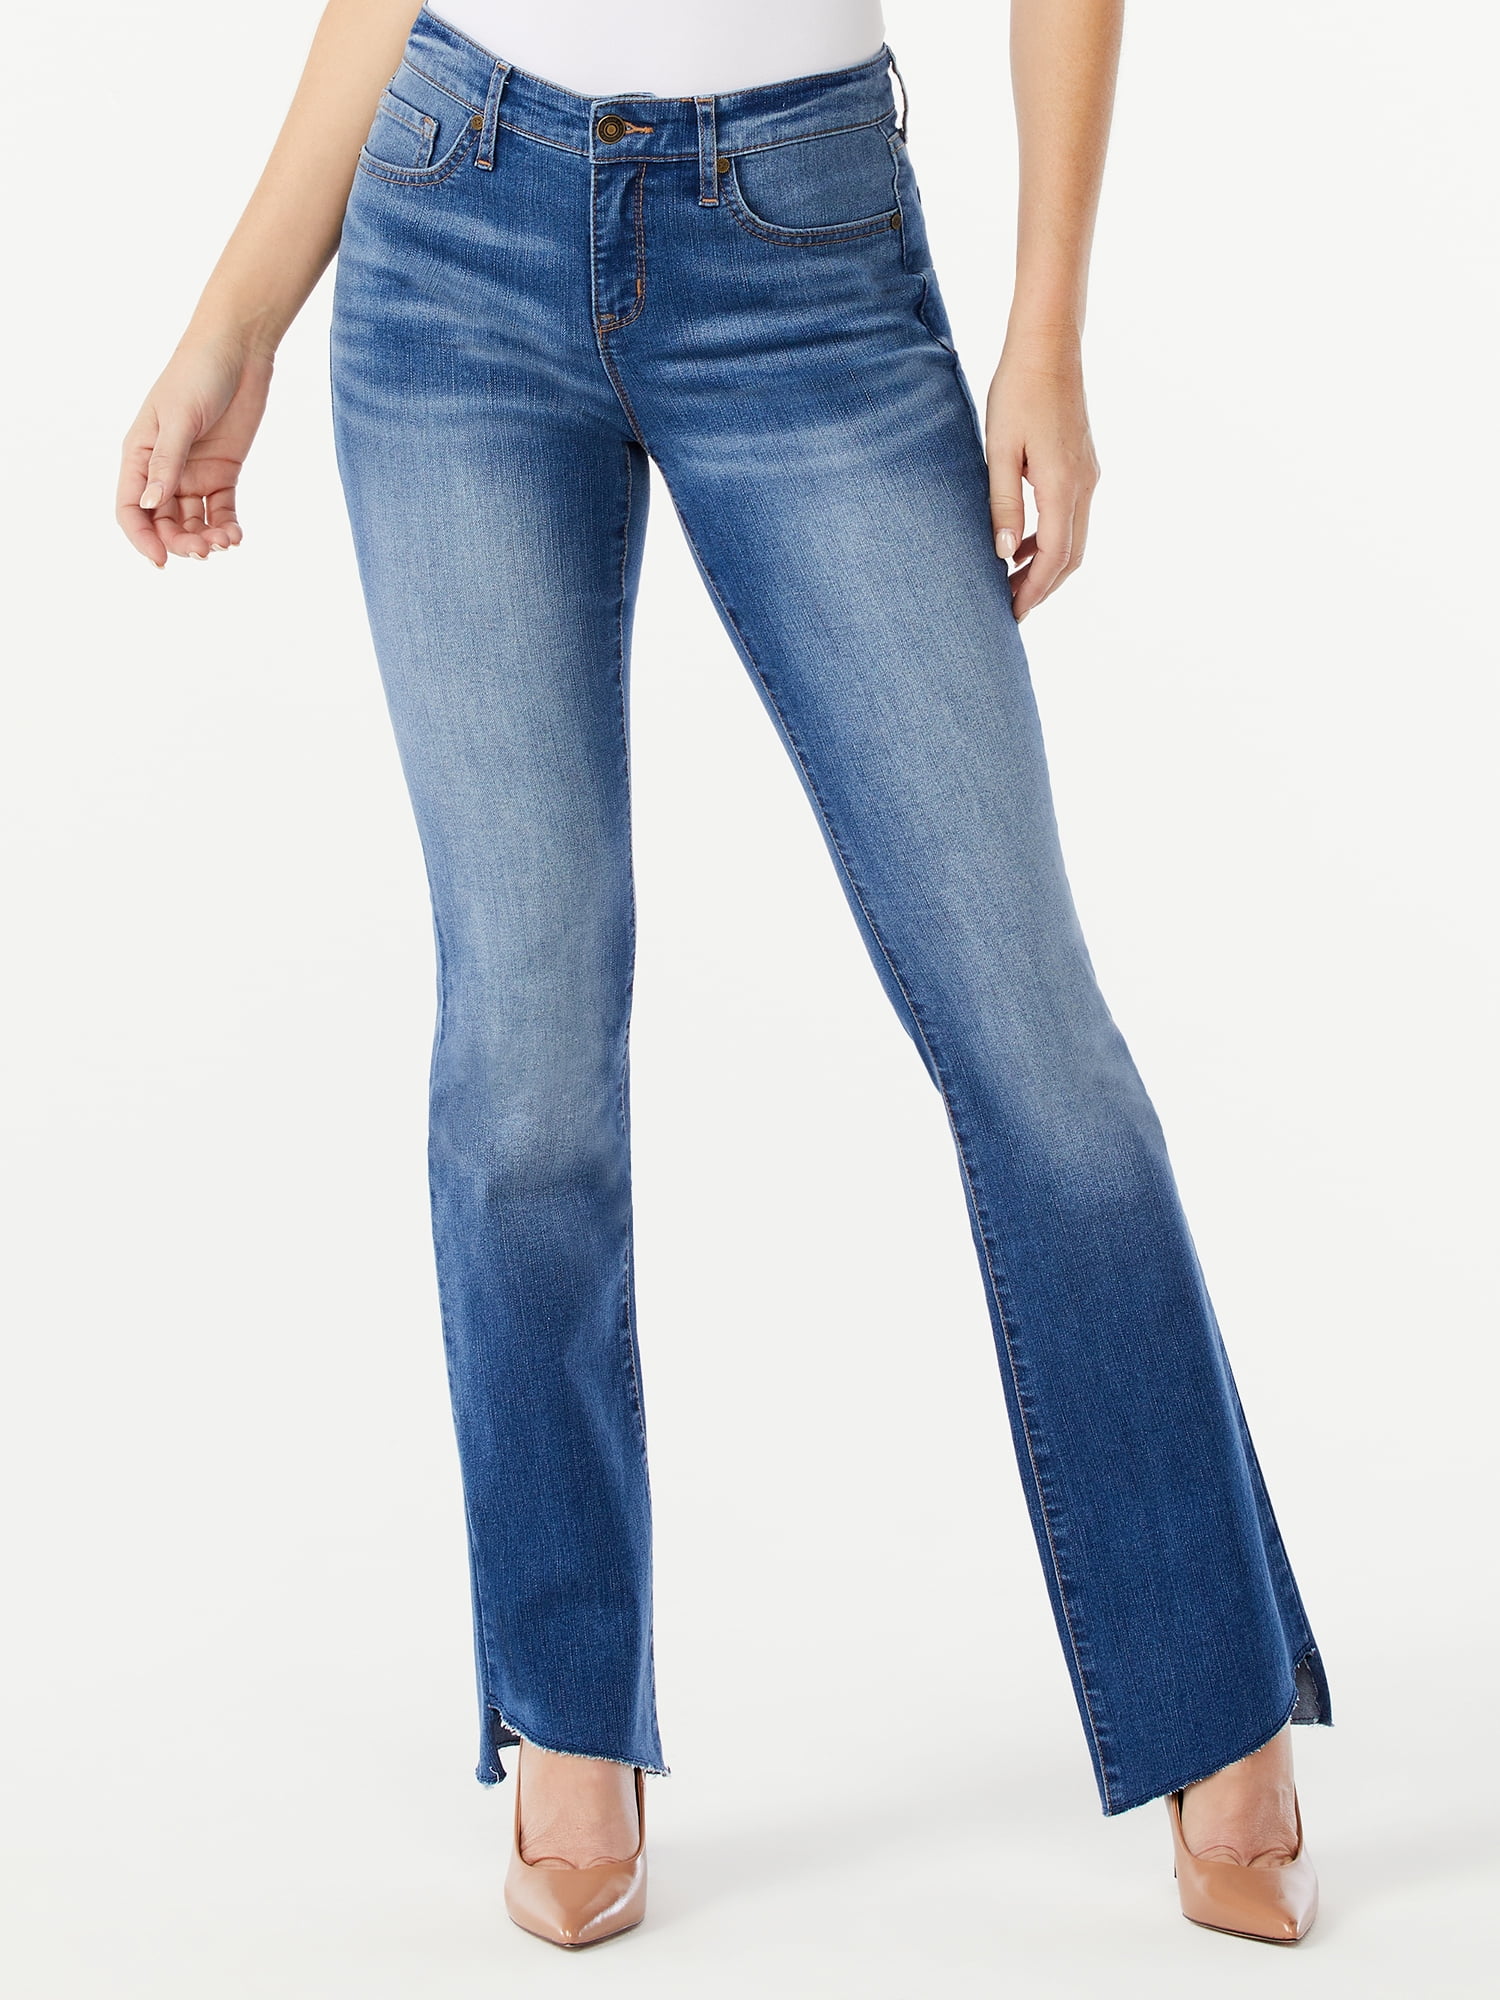 Sofia Jeans Women's Marisol Bootcut High Rise Step Hem Jeans - Walmart.com